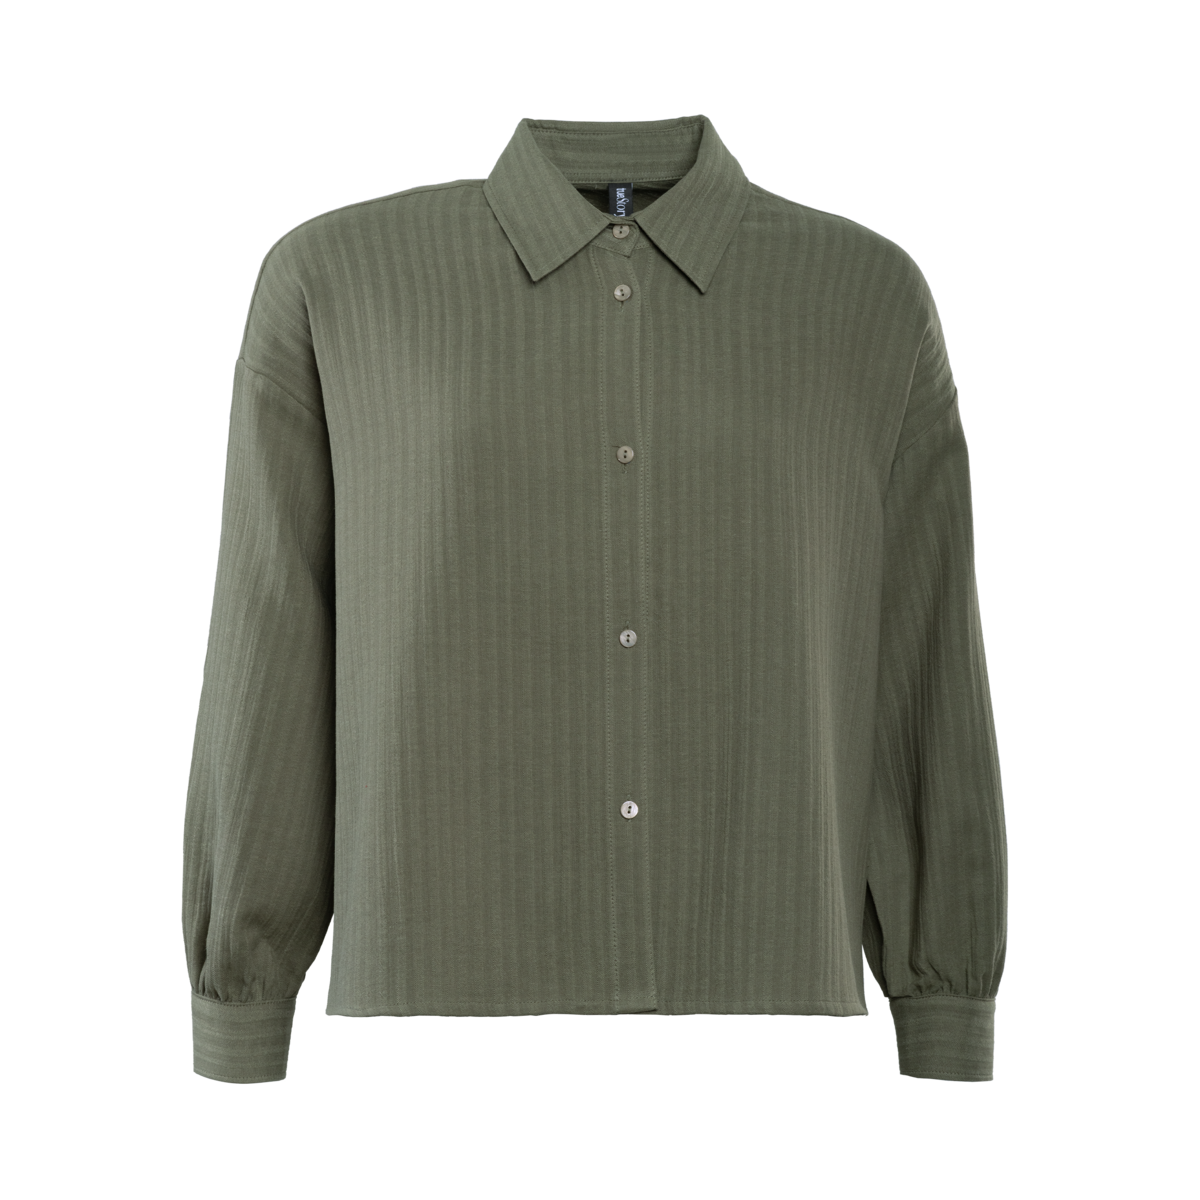 Khaki Seersucker blouse, BELINE